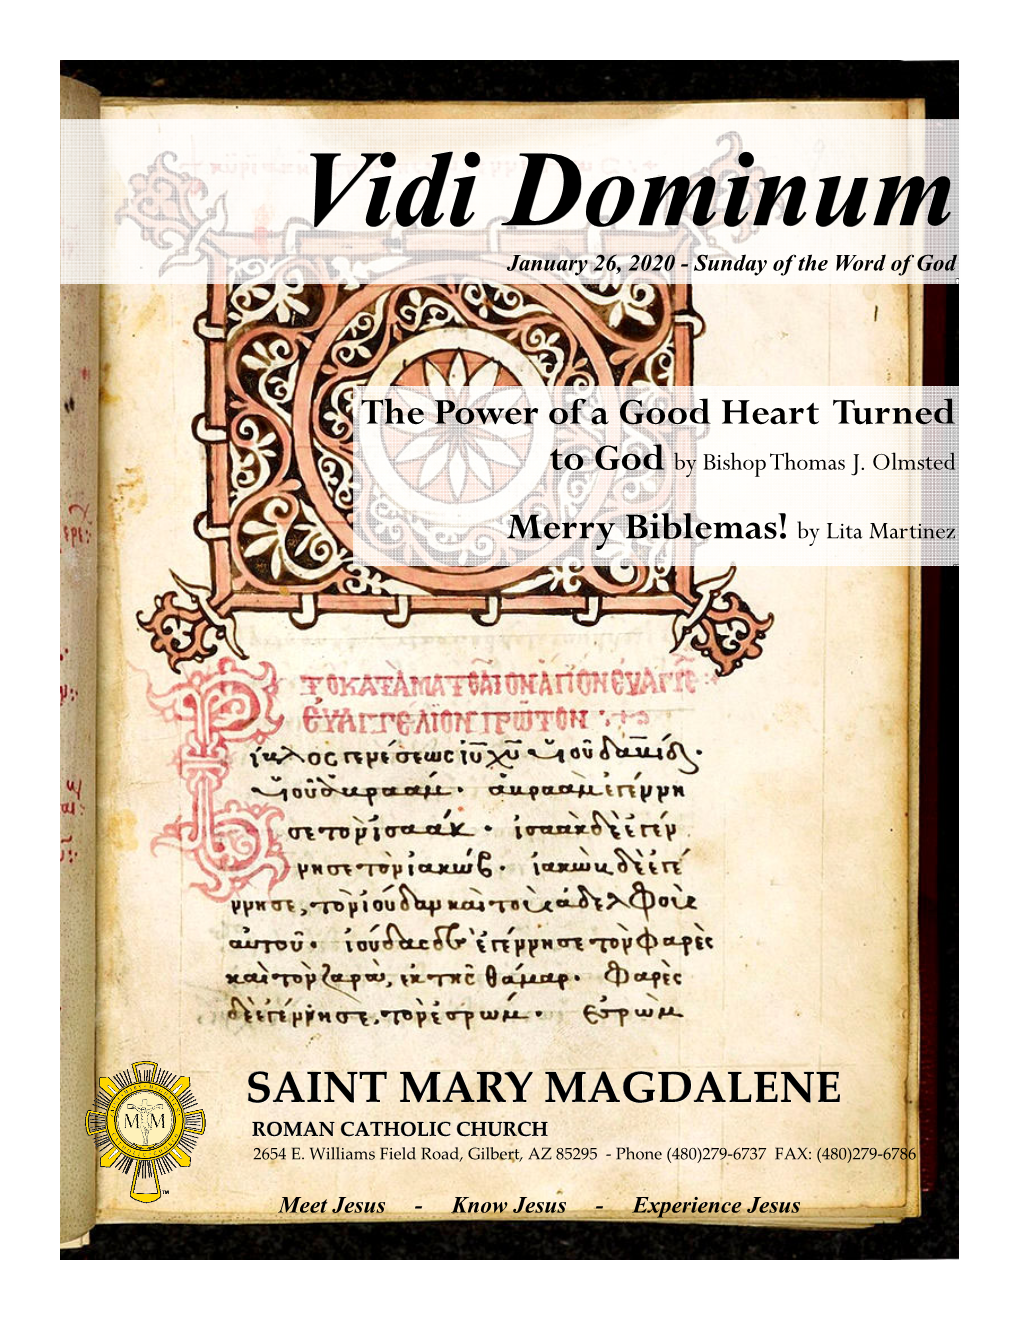 Vidi Dominum January 26, 2020 - Sunday of the Word of God